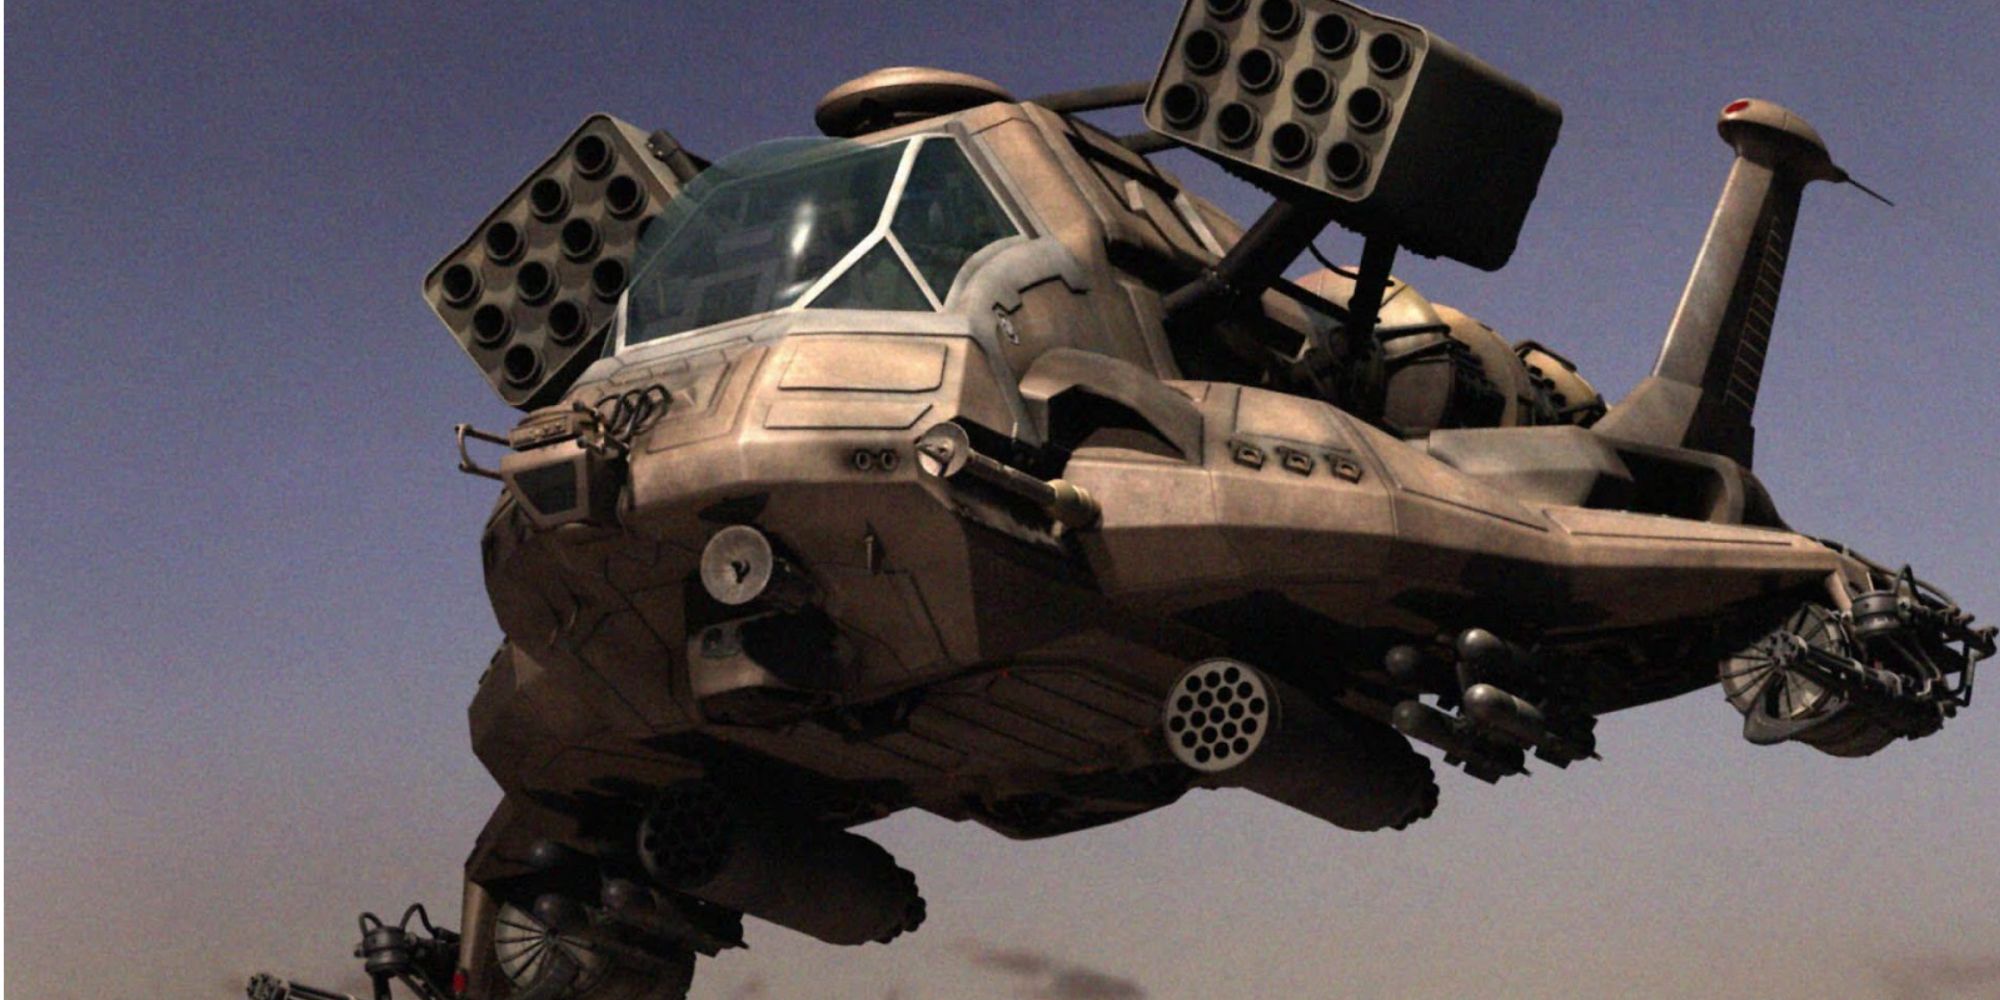 Raptor Dropship from Battlestar Galactica.